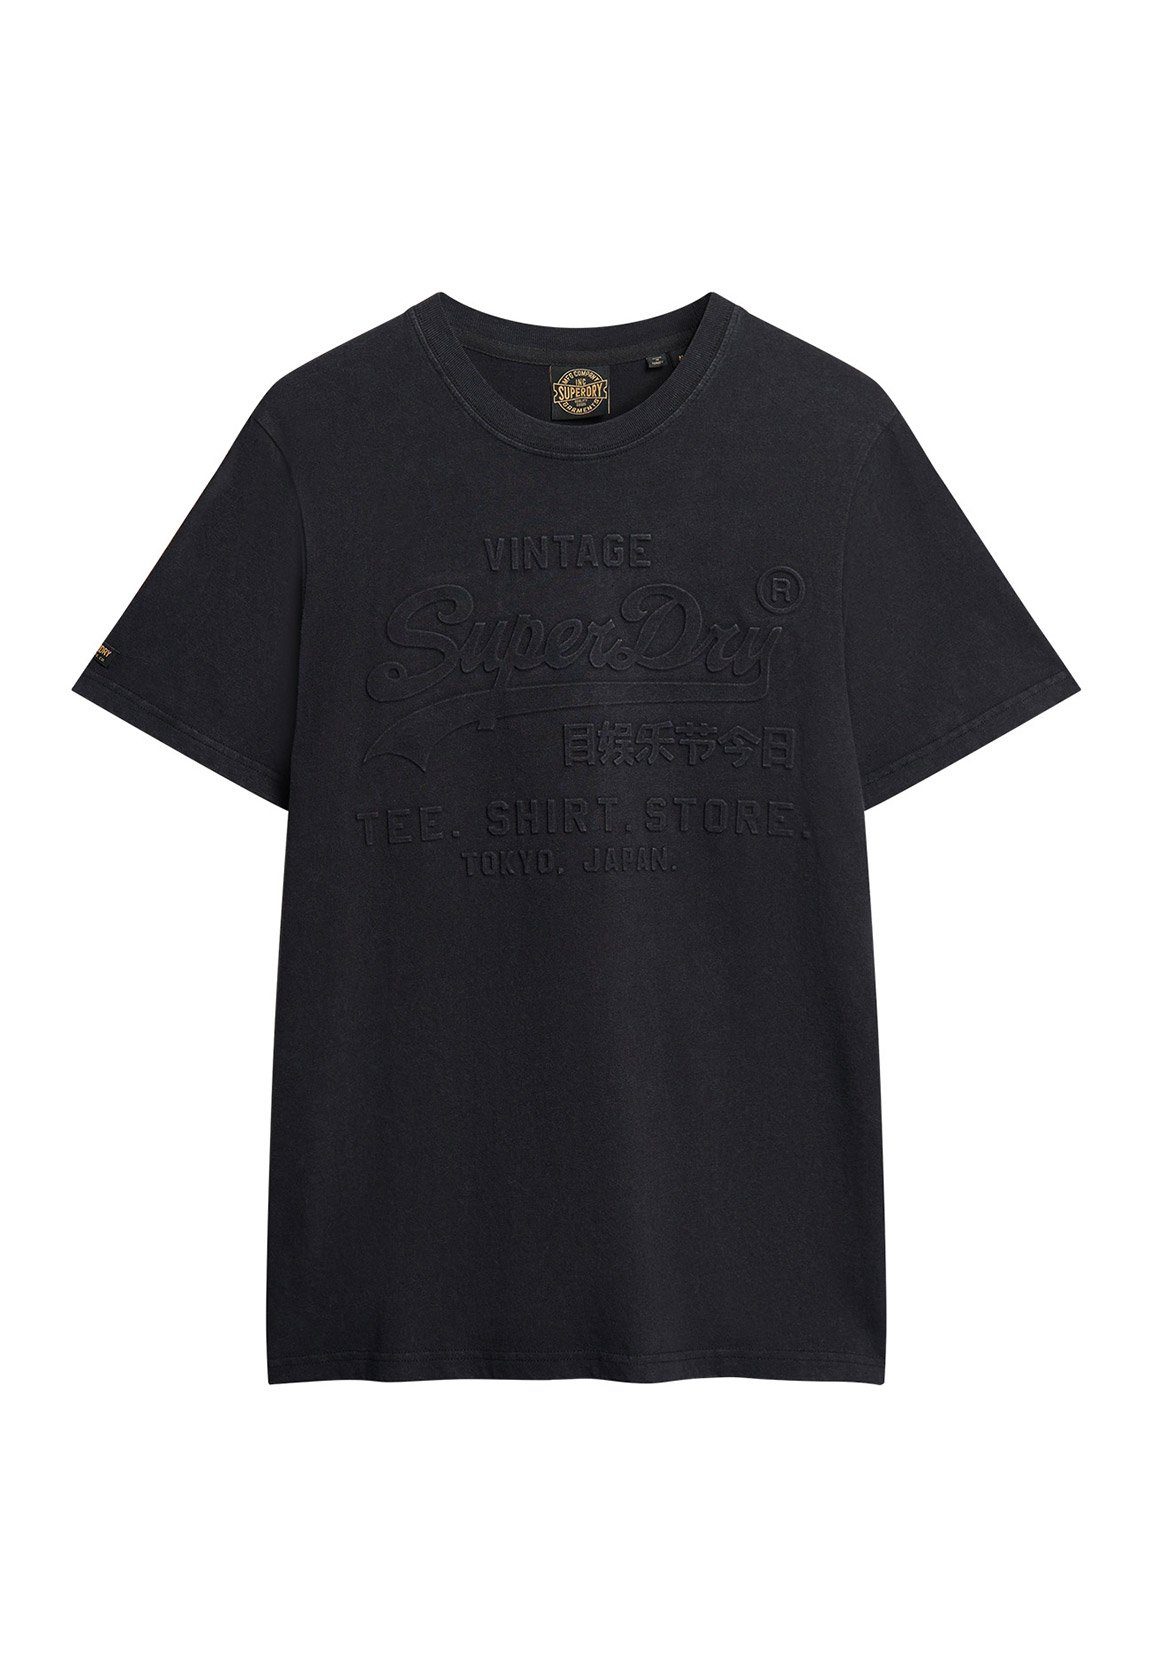 SHIRT VL T-Shirt Jet Superdry Herren Schwarz EMBOSSED T-Shirt Superdry Black T